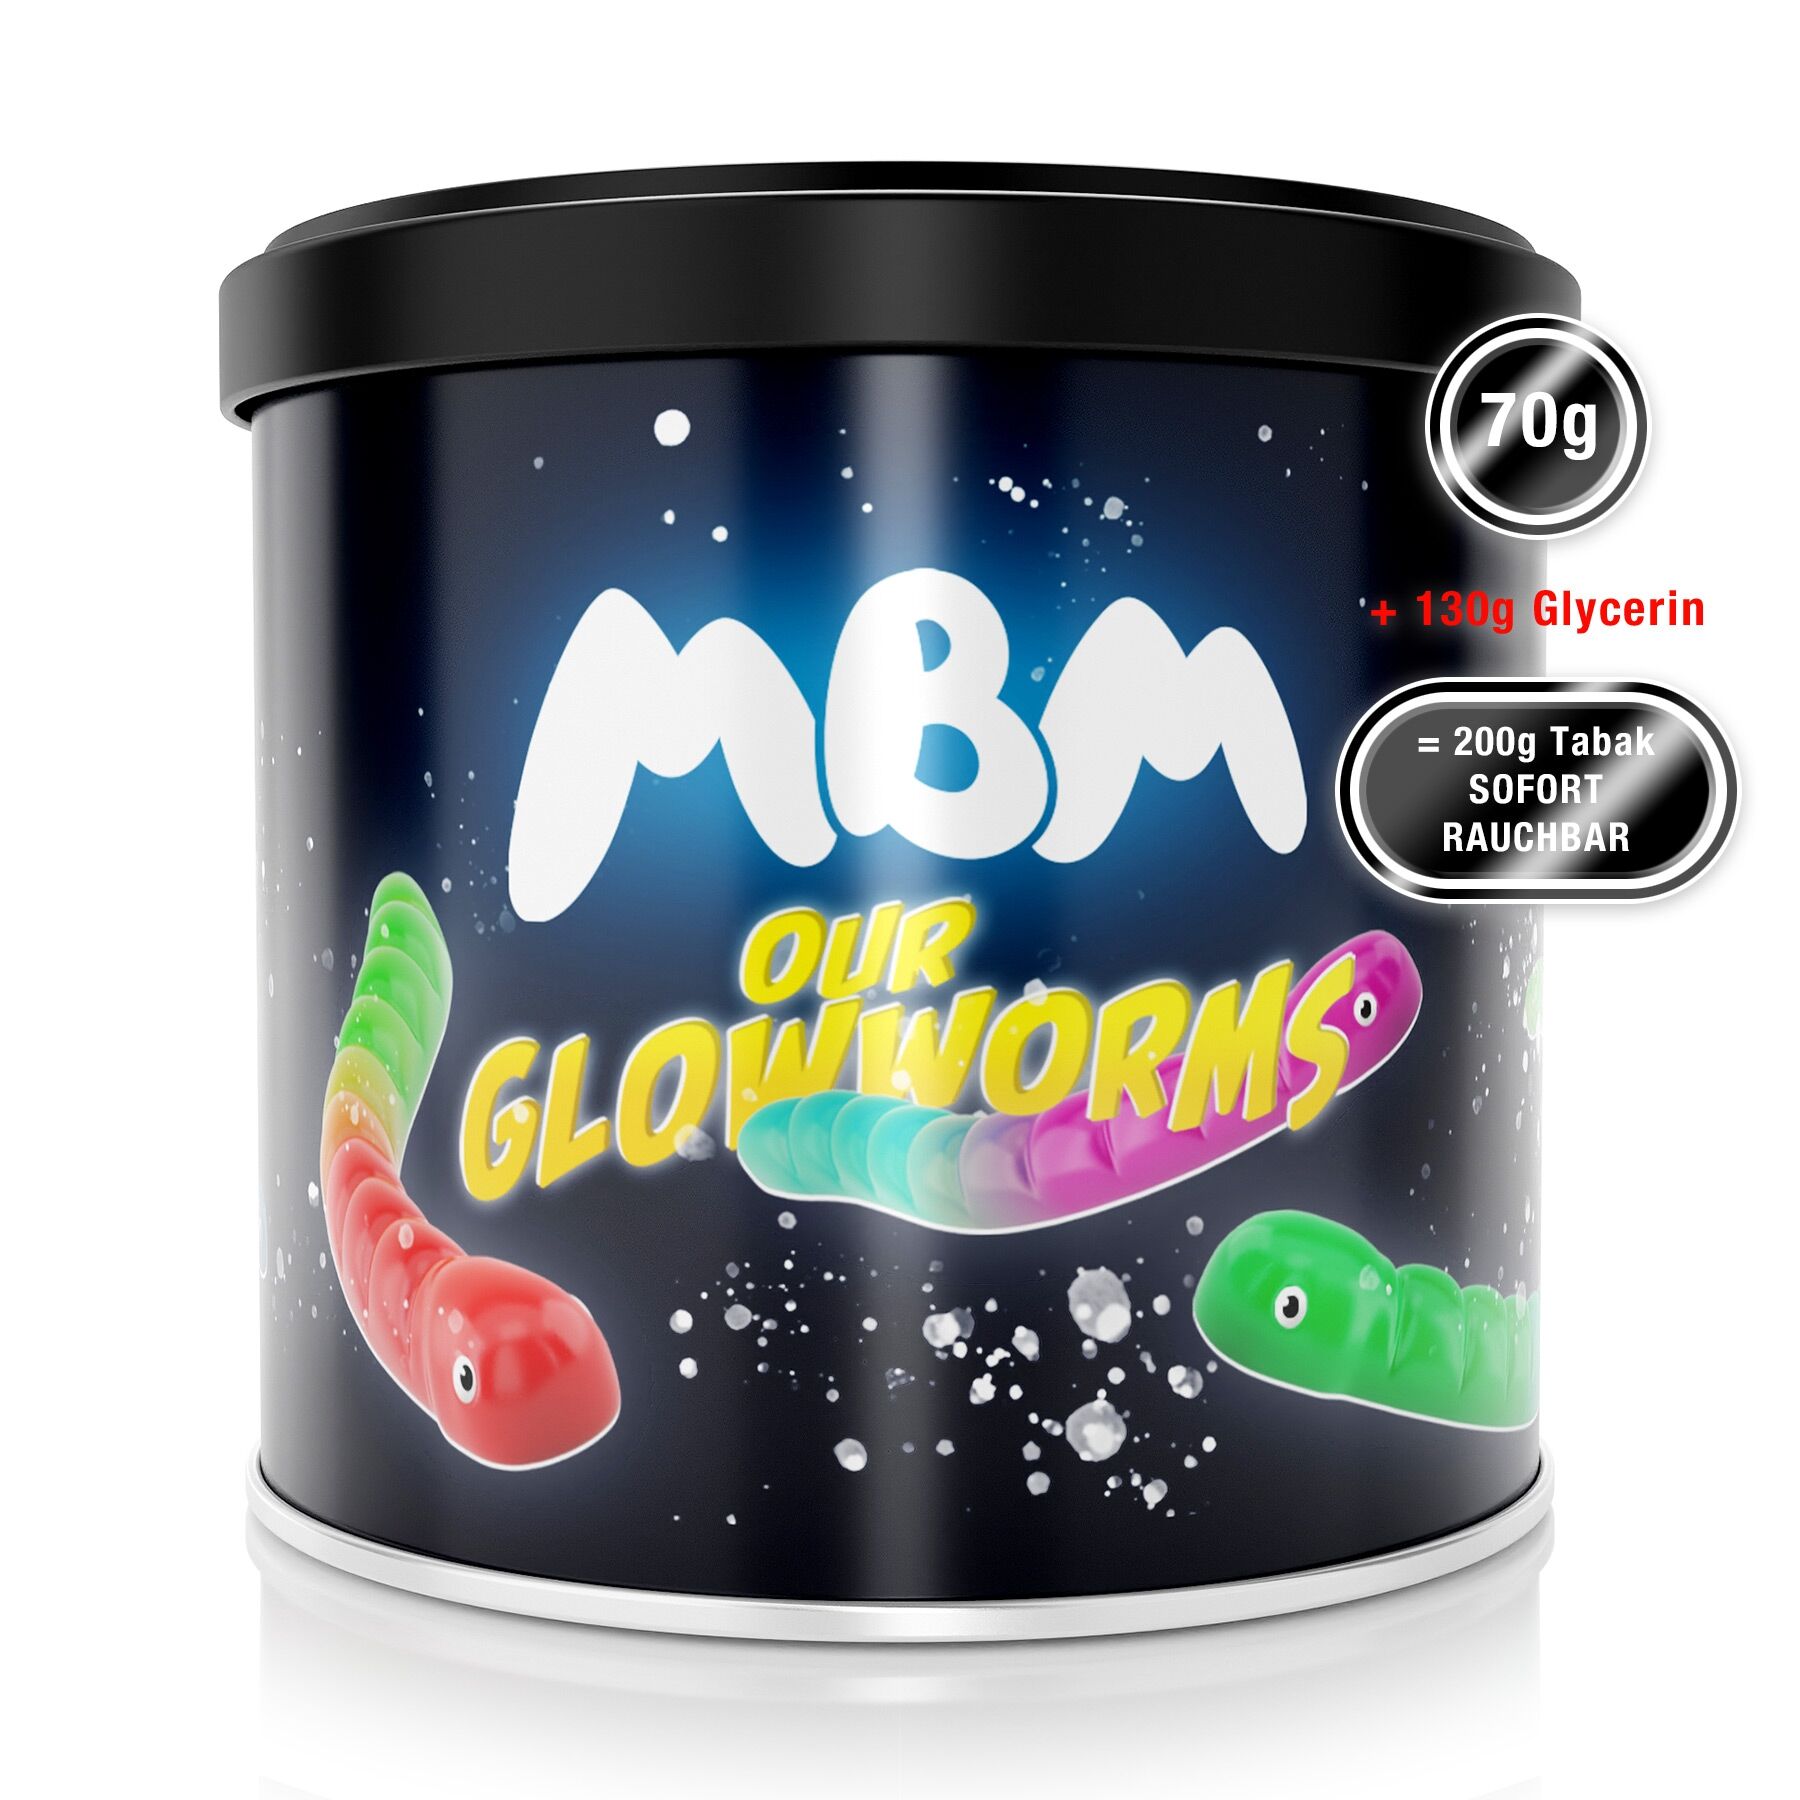 MBM 70g Our Glowworms